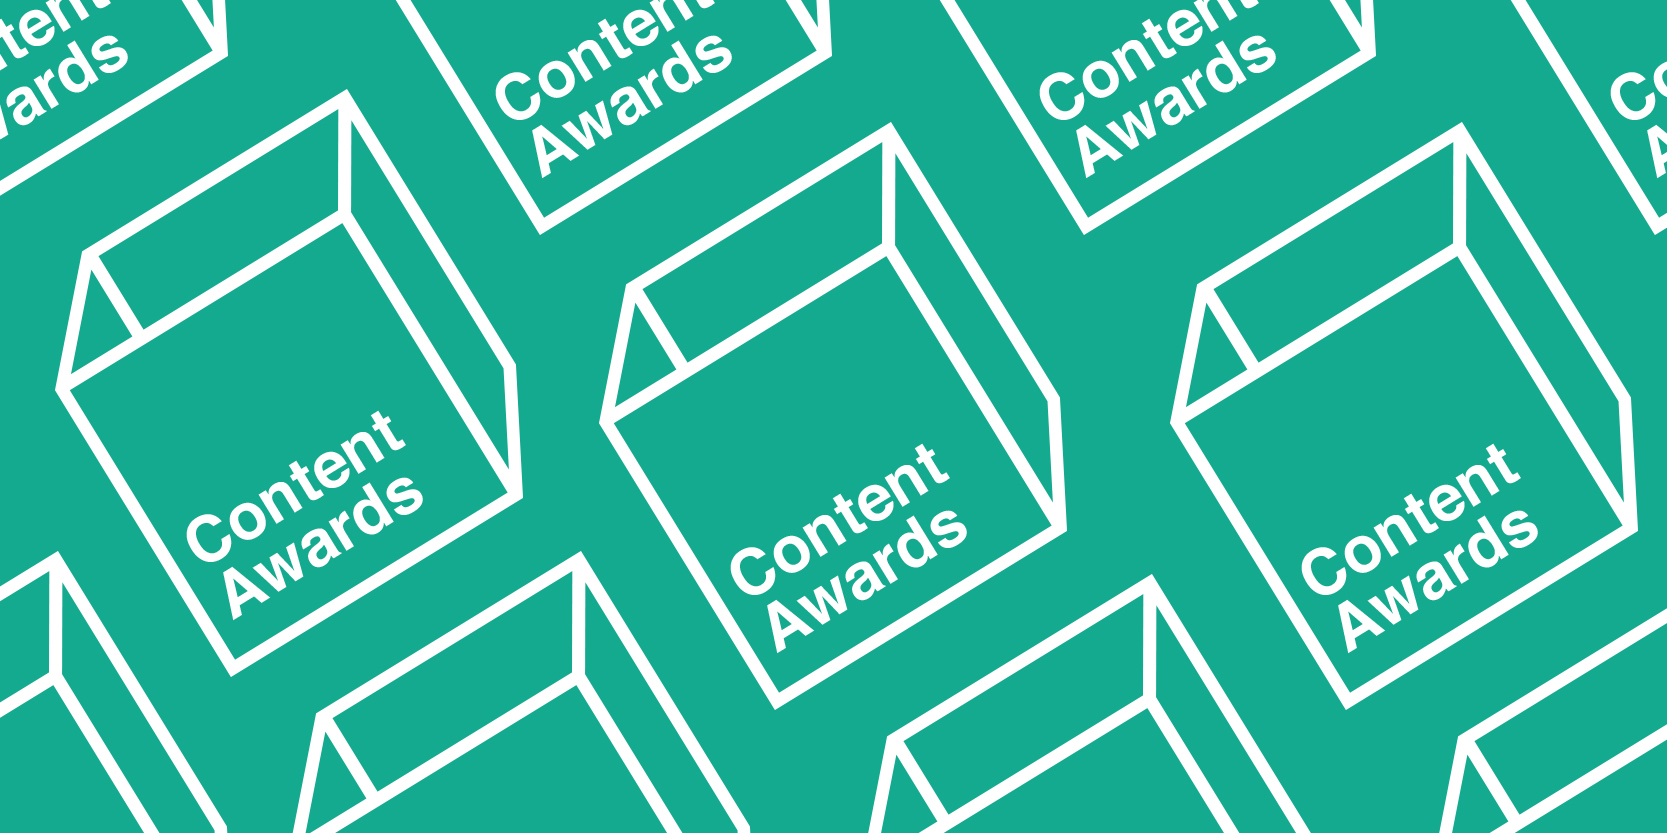 content_awards copy